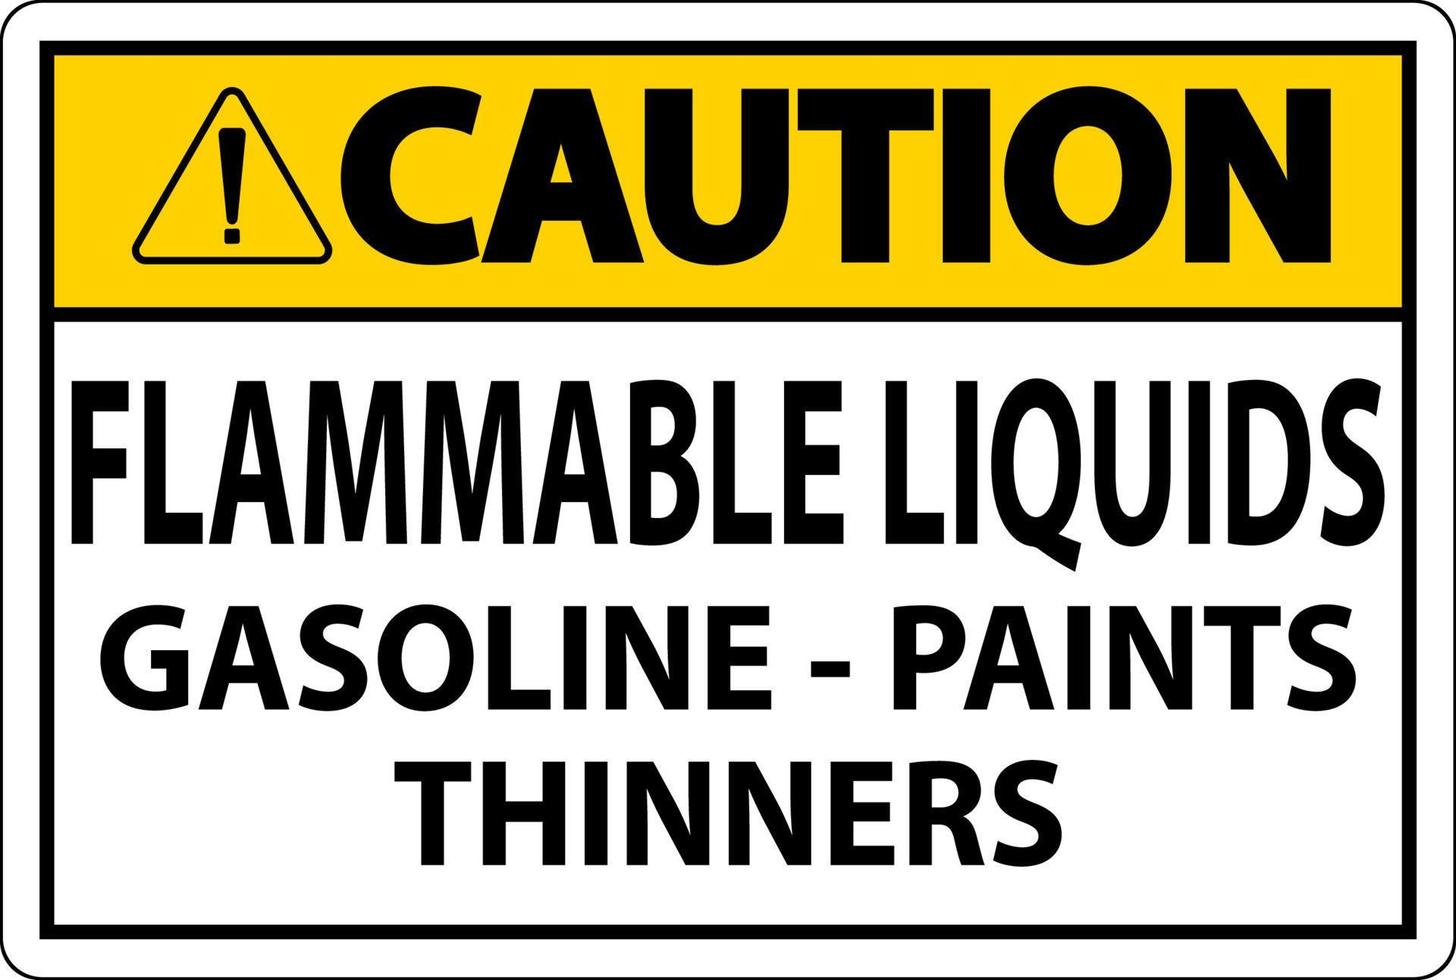 attenzione cartello infiammabile liquidi, benzina, vernici, diluenti vettore